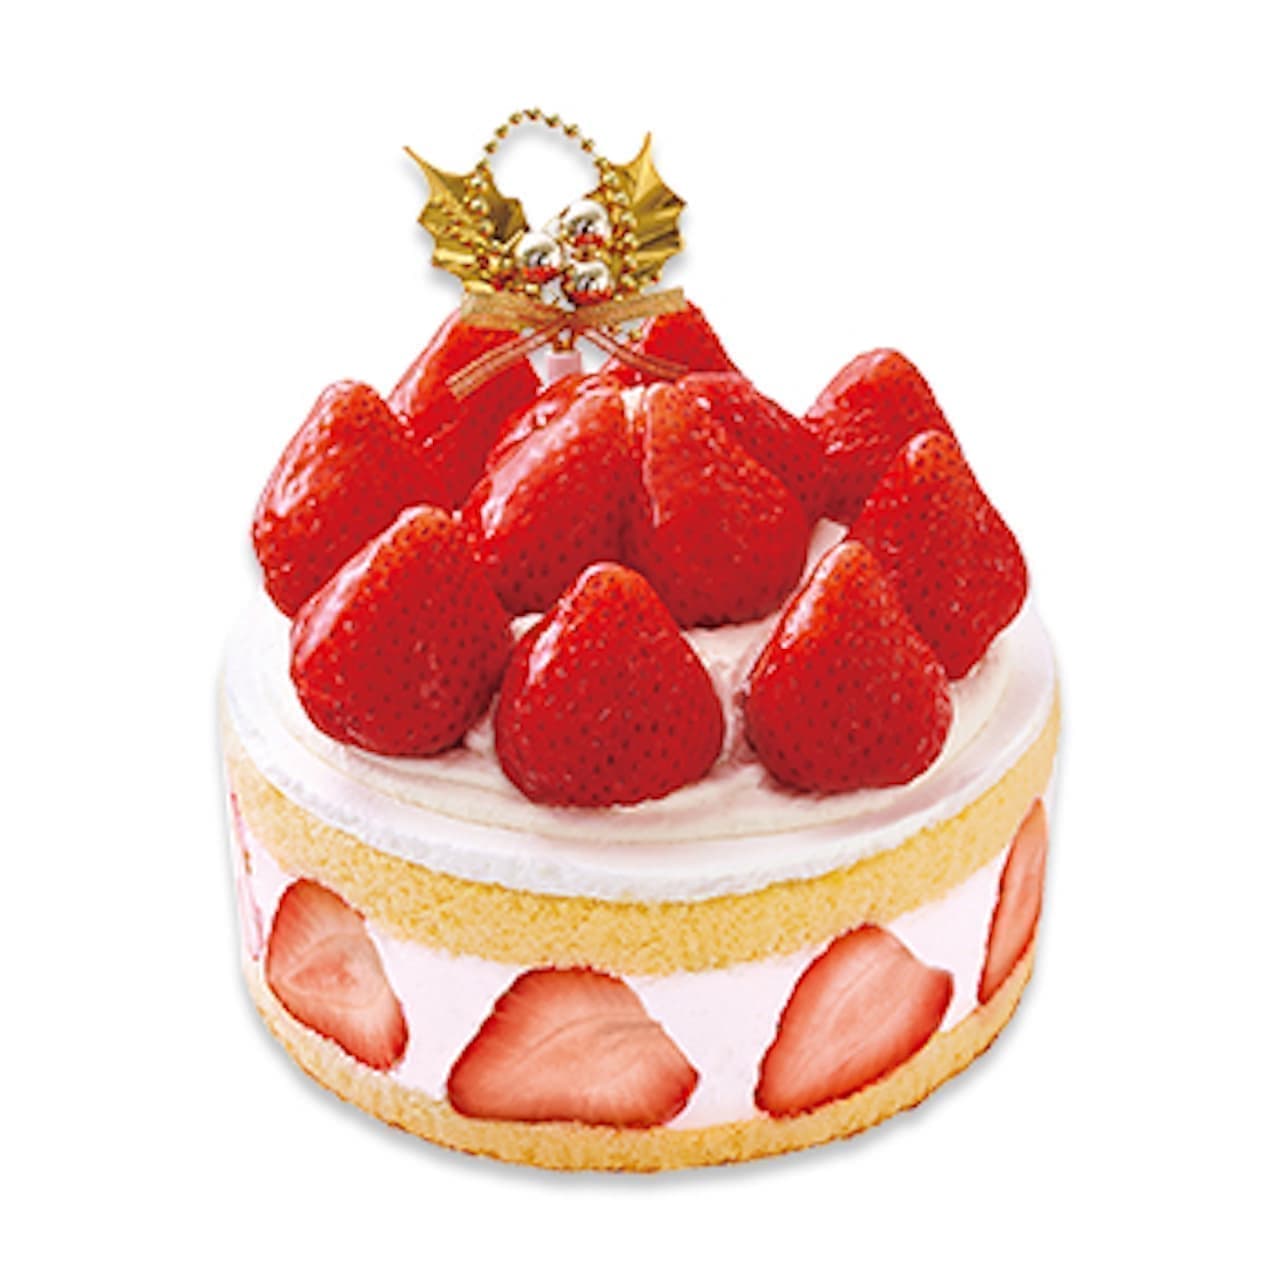 Fujiya "Luxury Christmas Shortcake filled with Amaou Strawberries".